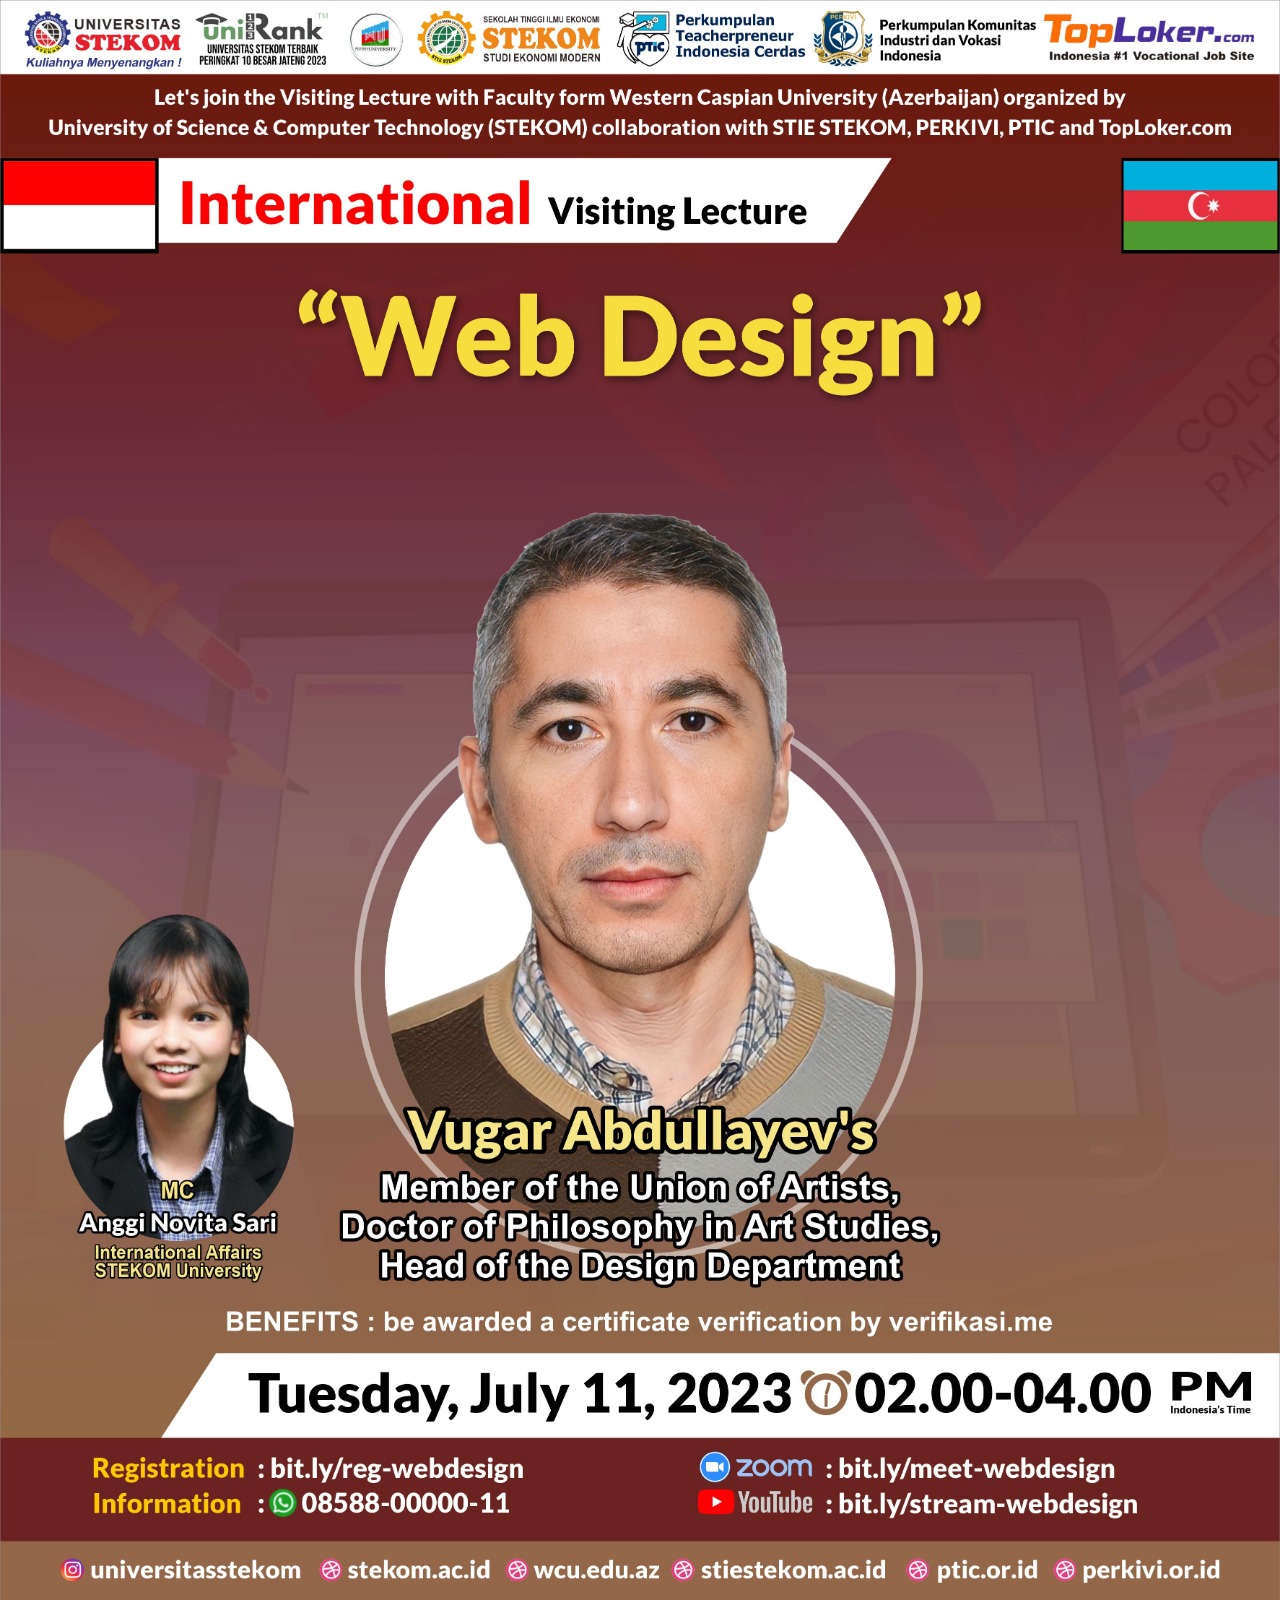 Western Caspian University's Design Department Head, Dr. Vüqar Abdullayev, to Deliver Online Lecture at International Webinar in Indonesia